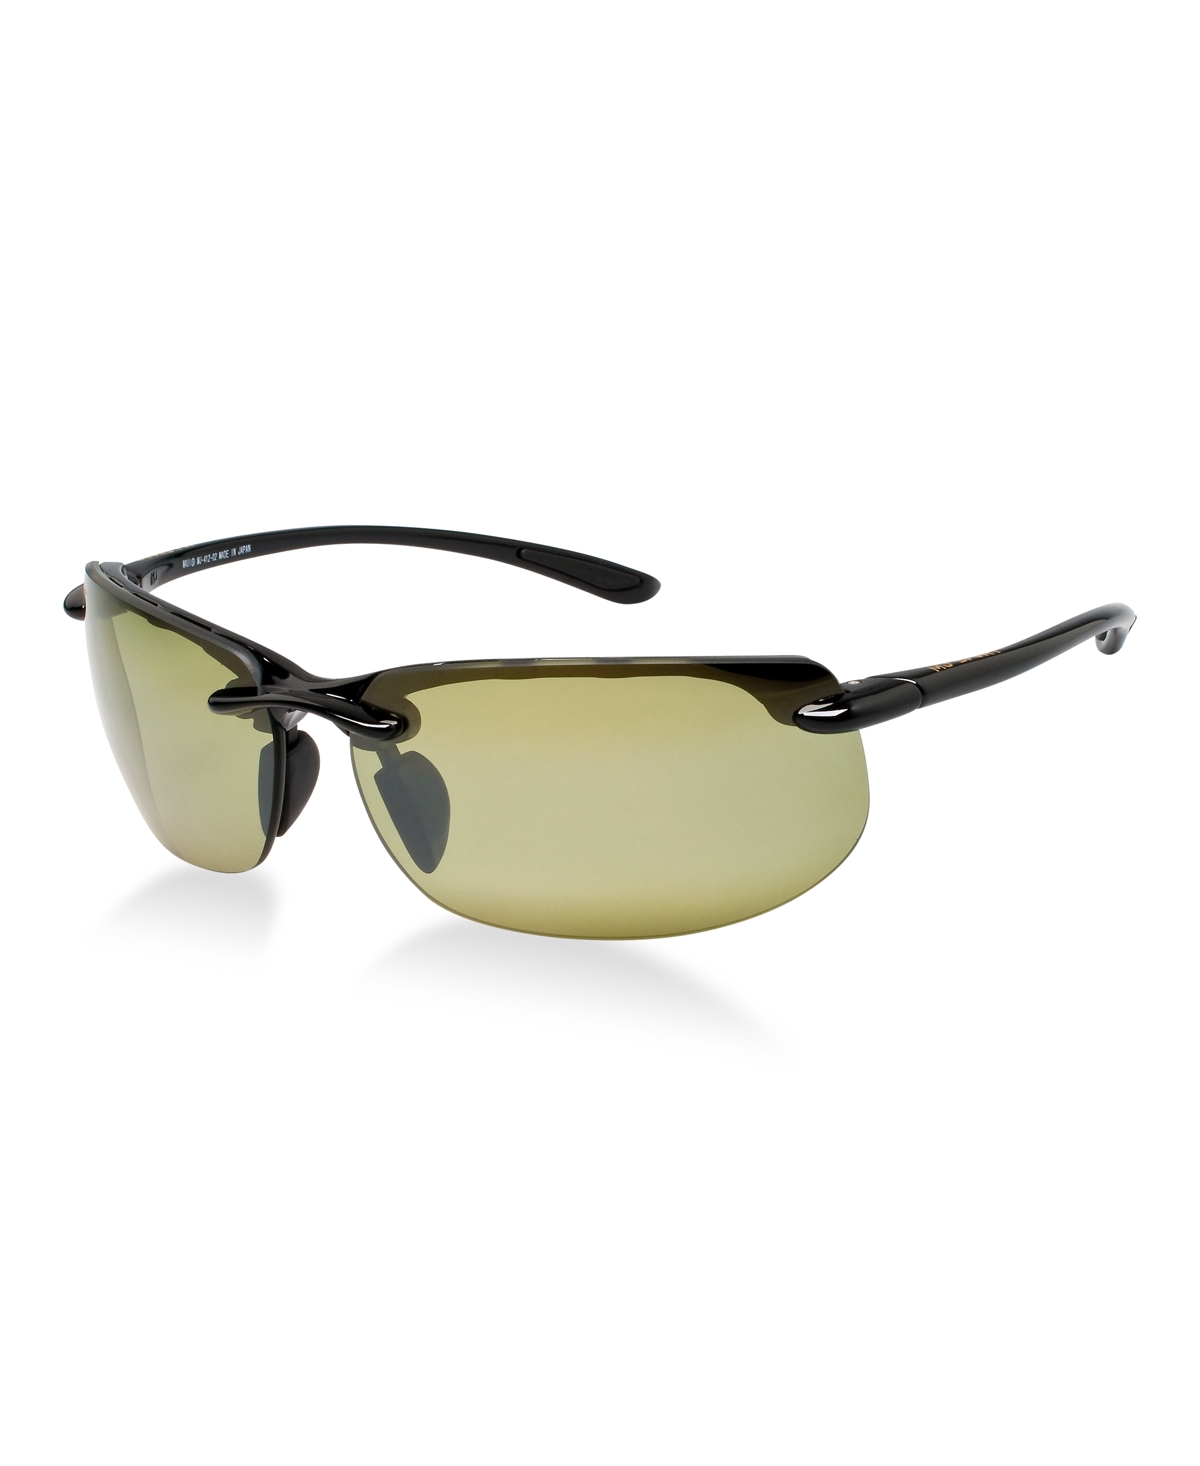 Banyans Polarized Sunglasses , 412 - Black/Green